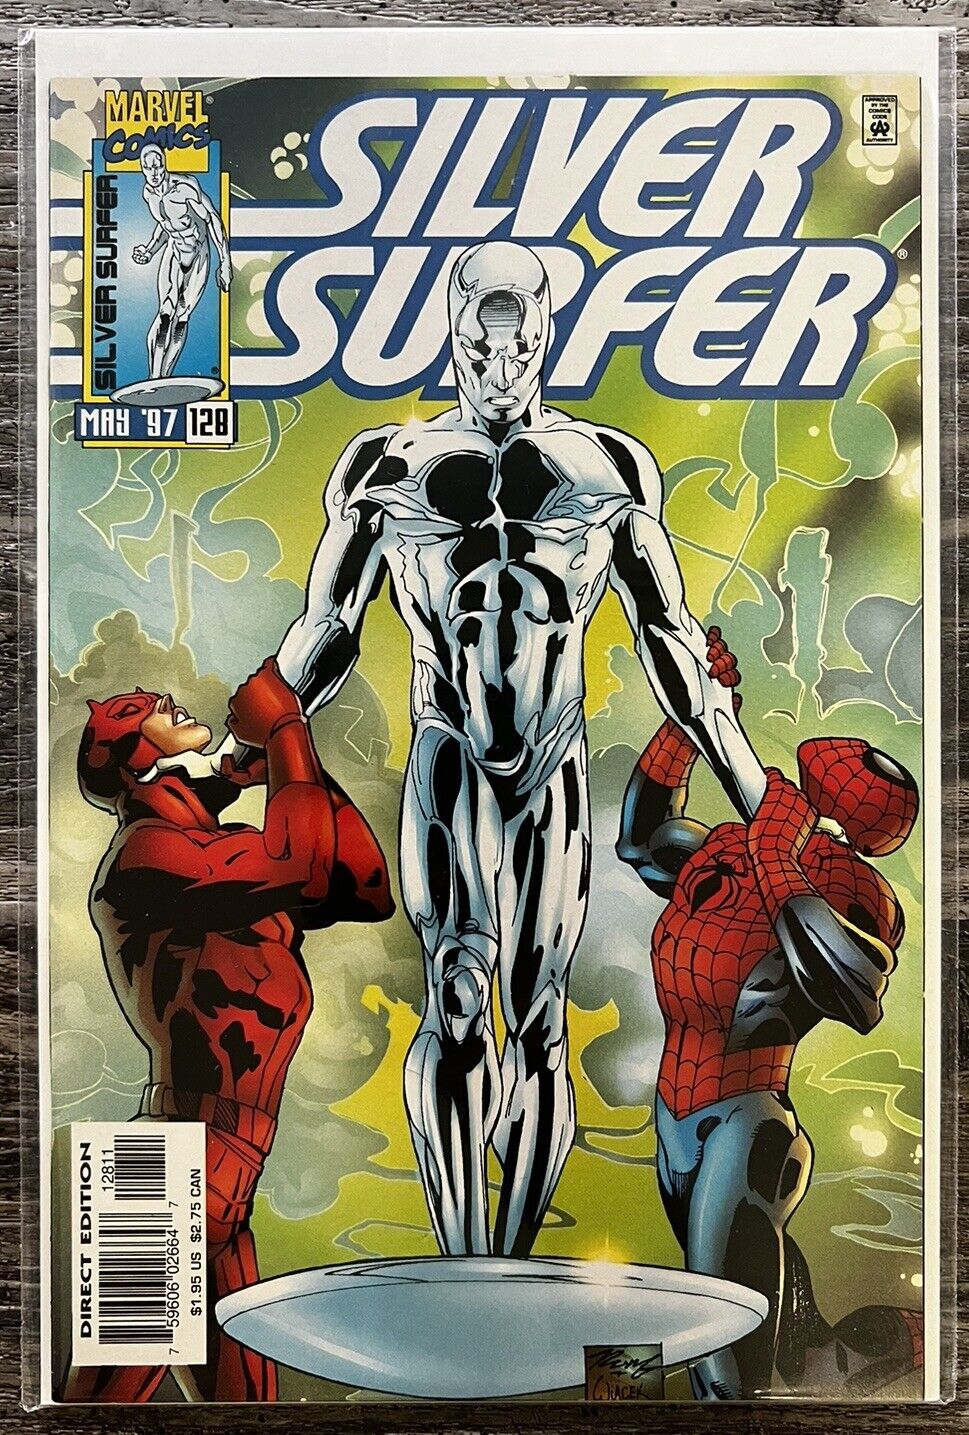 SILVER SURFER #128 - Low Print - HTF - Marvel Comics - Clean Copy See Pics